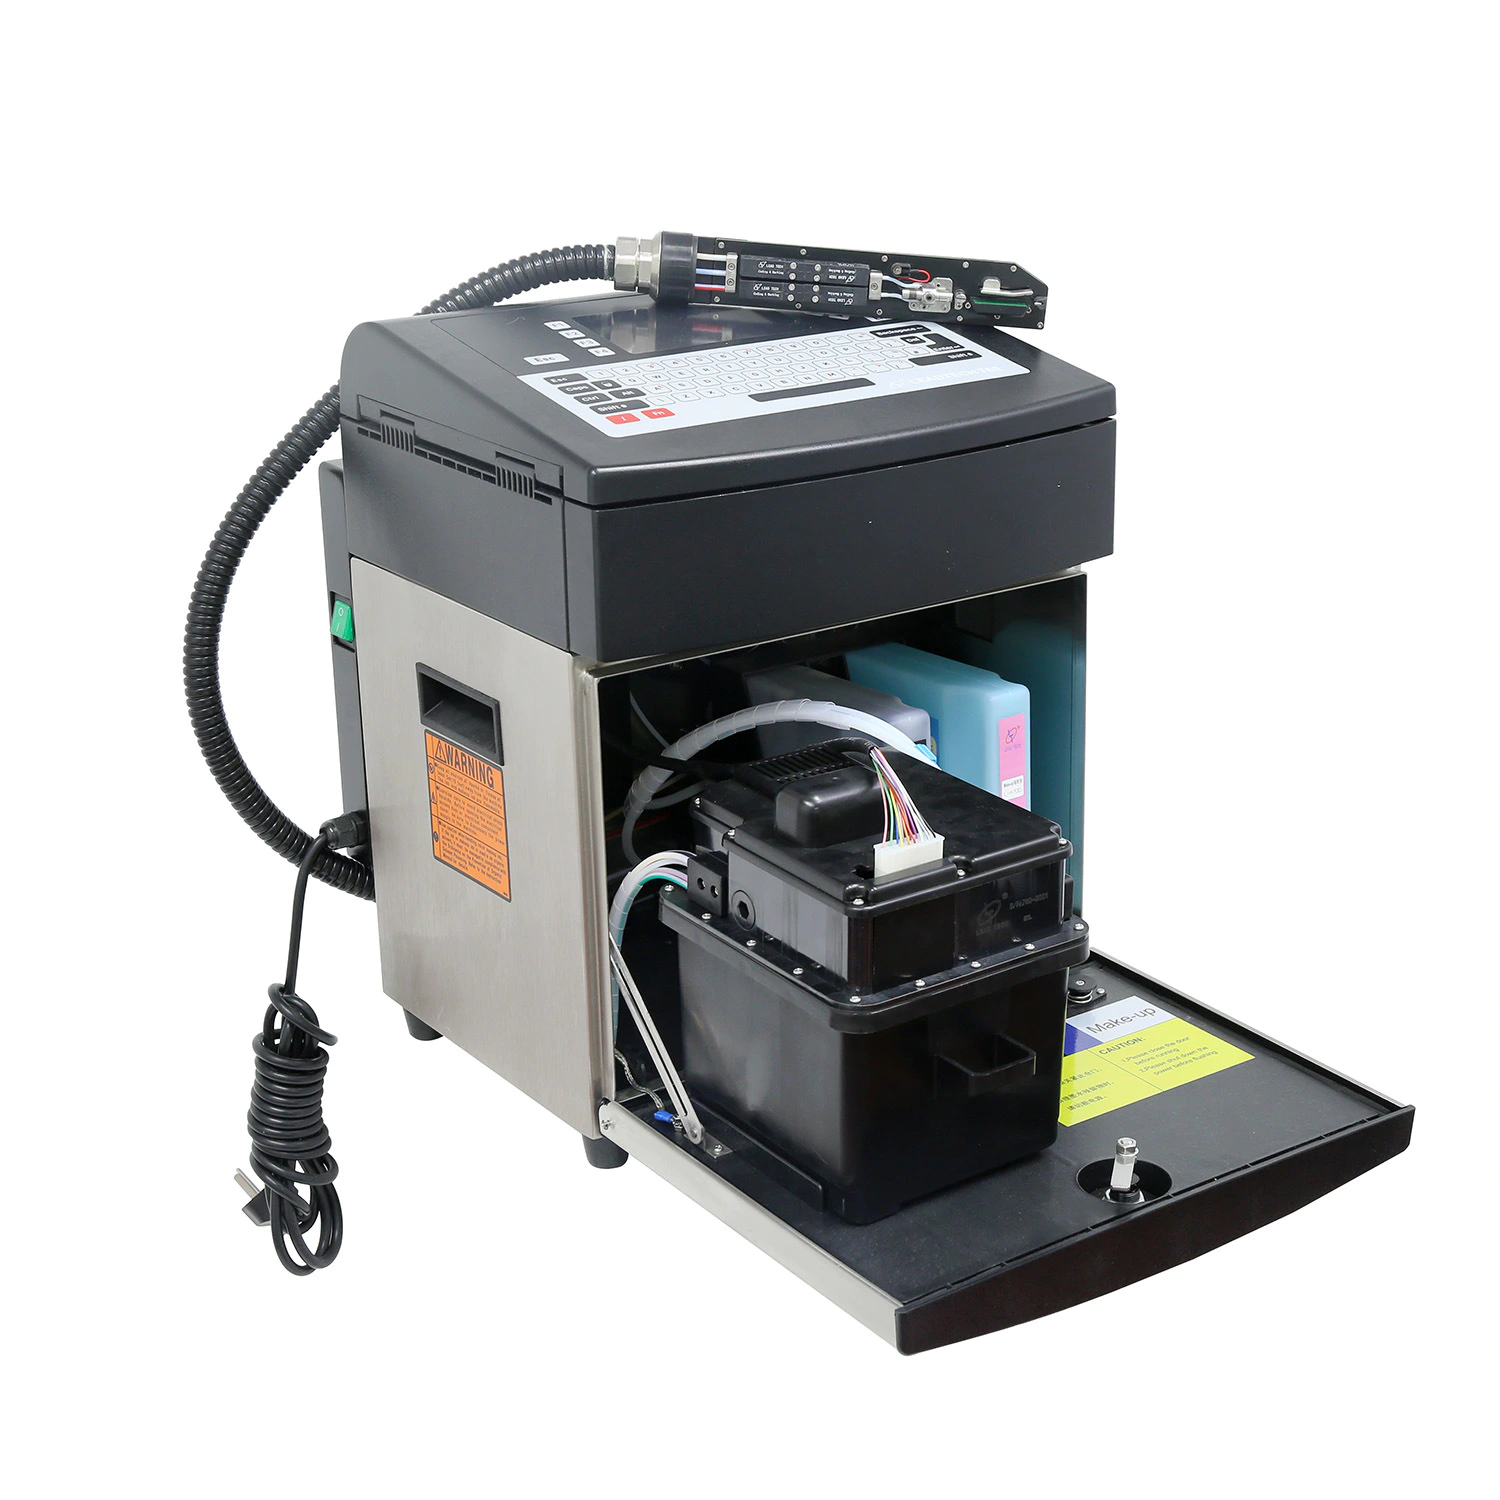 Lead Tech Lt760 Digital Ink Printing Machine for Plastic Printing